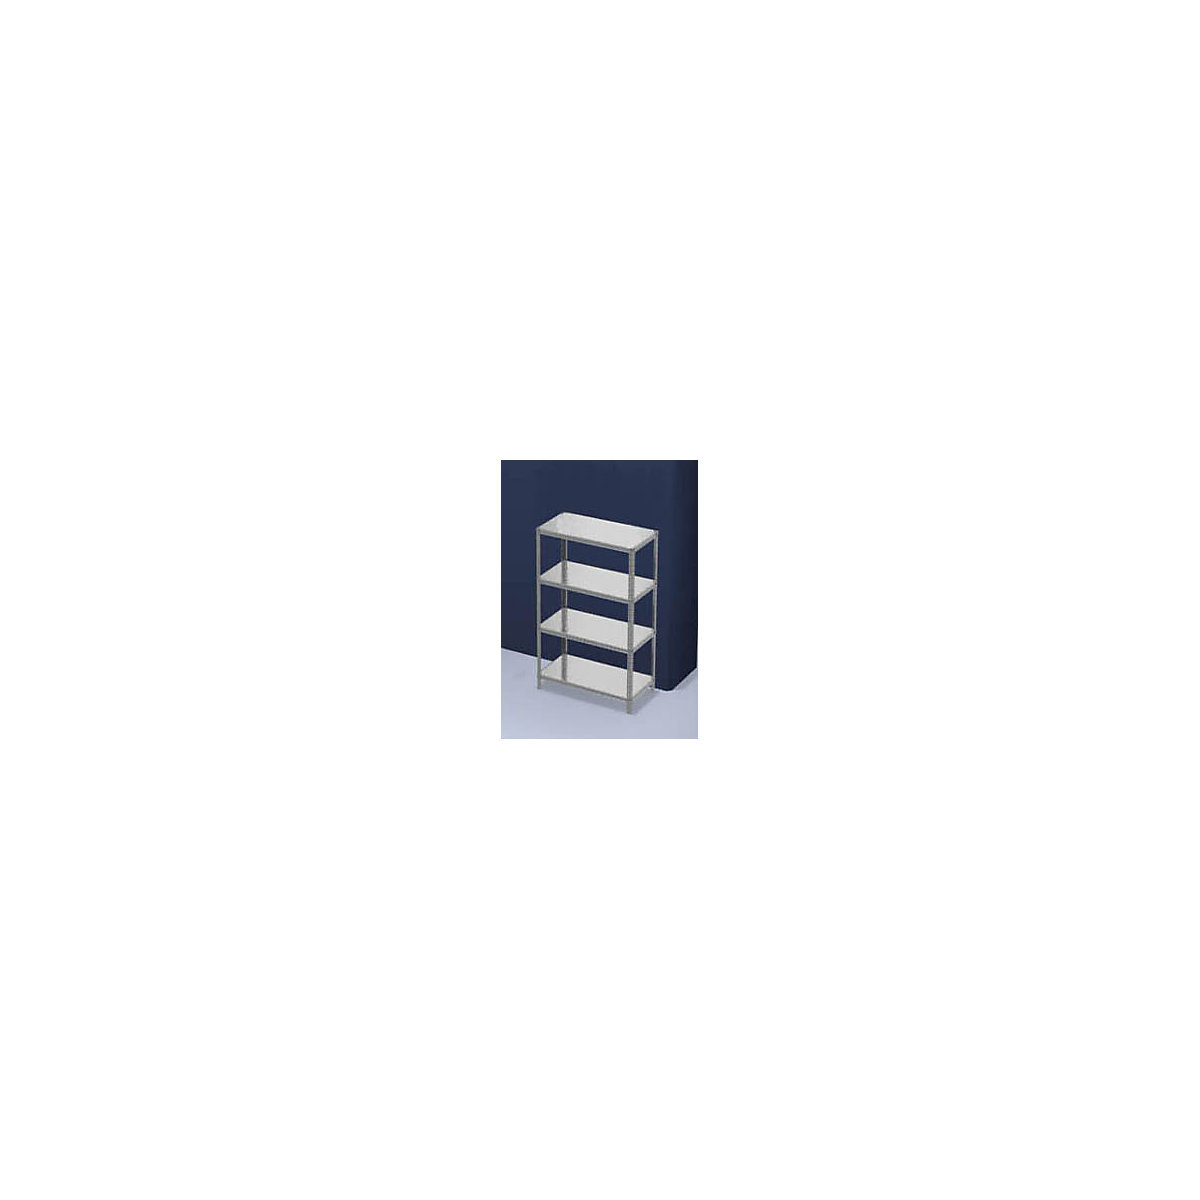 Bolt-together shelf unit, light duty, zinc plated – eurokraft pro, shelf unit height 1500 mm, shelf width 1000 mm, depth 500 mm, standard shelf unit-12